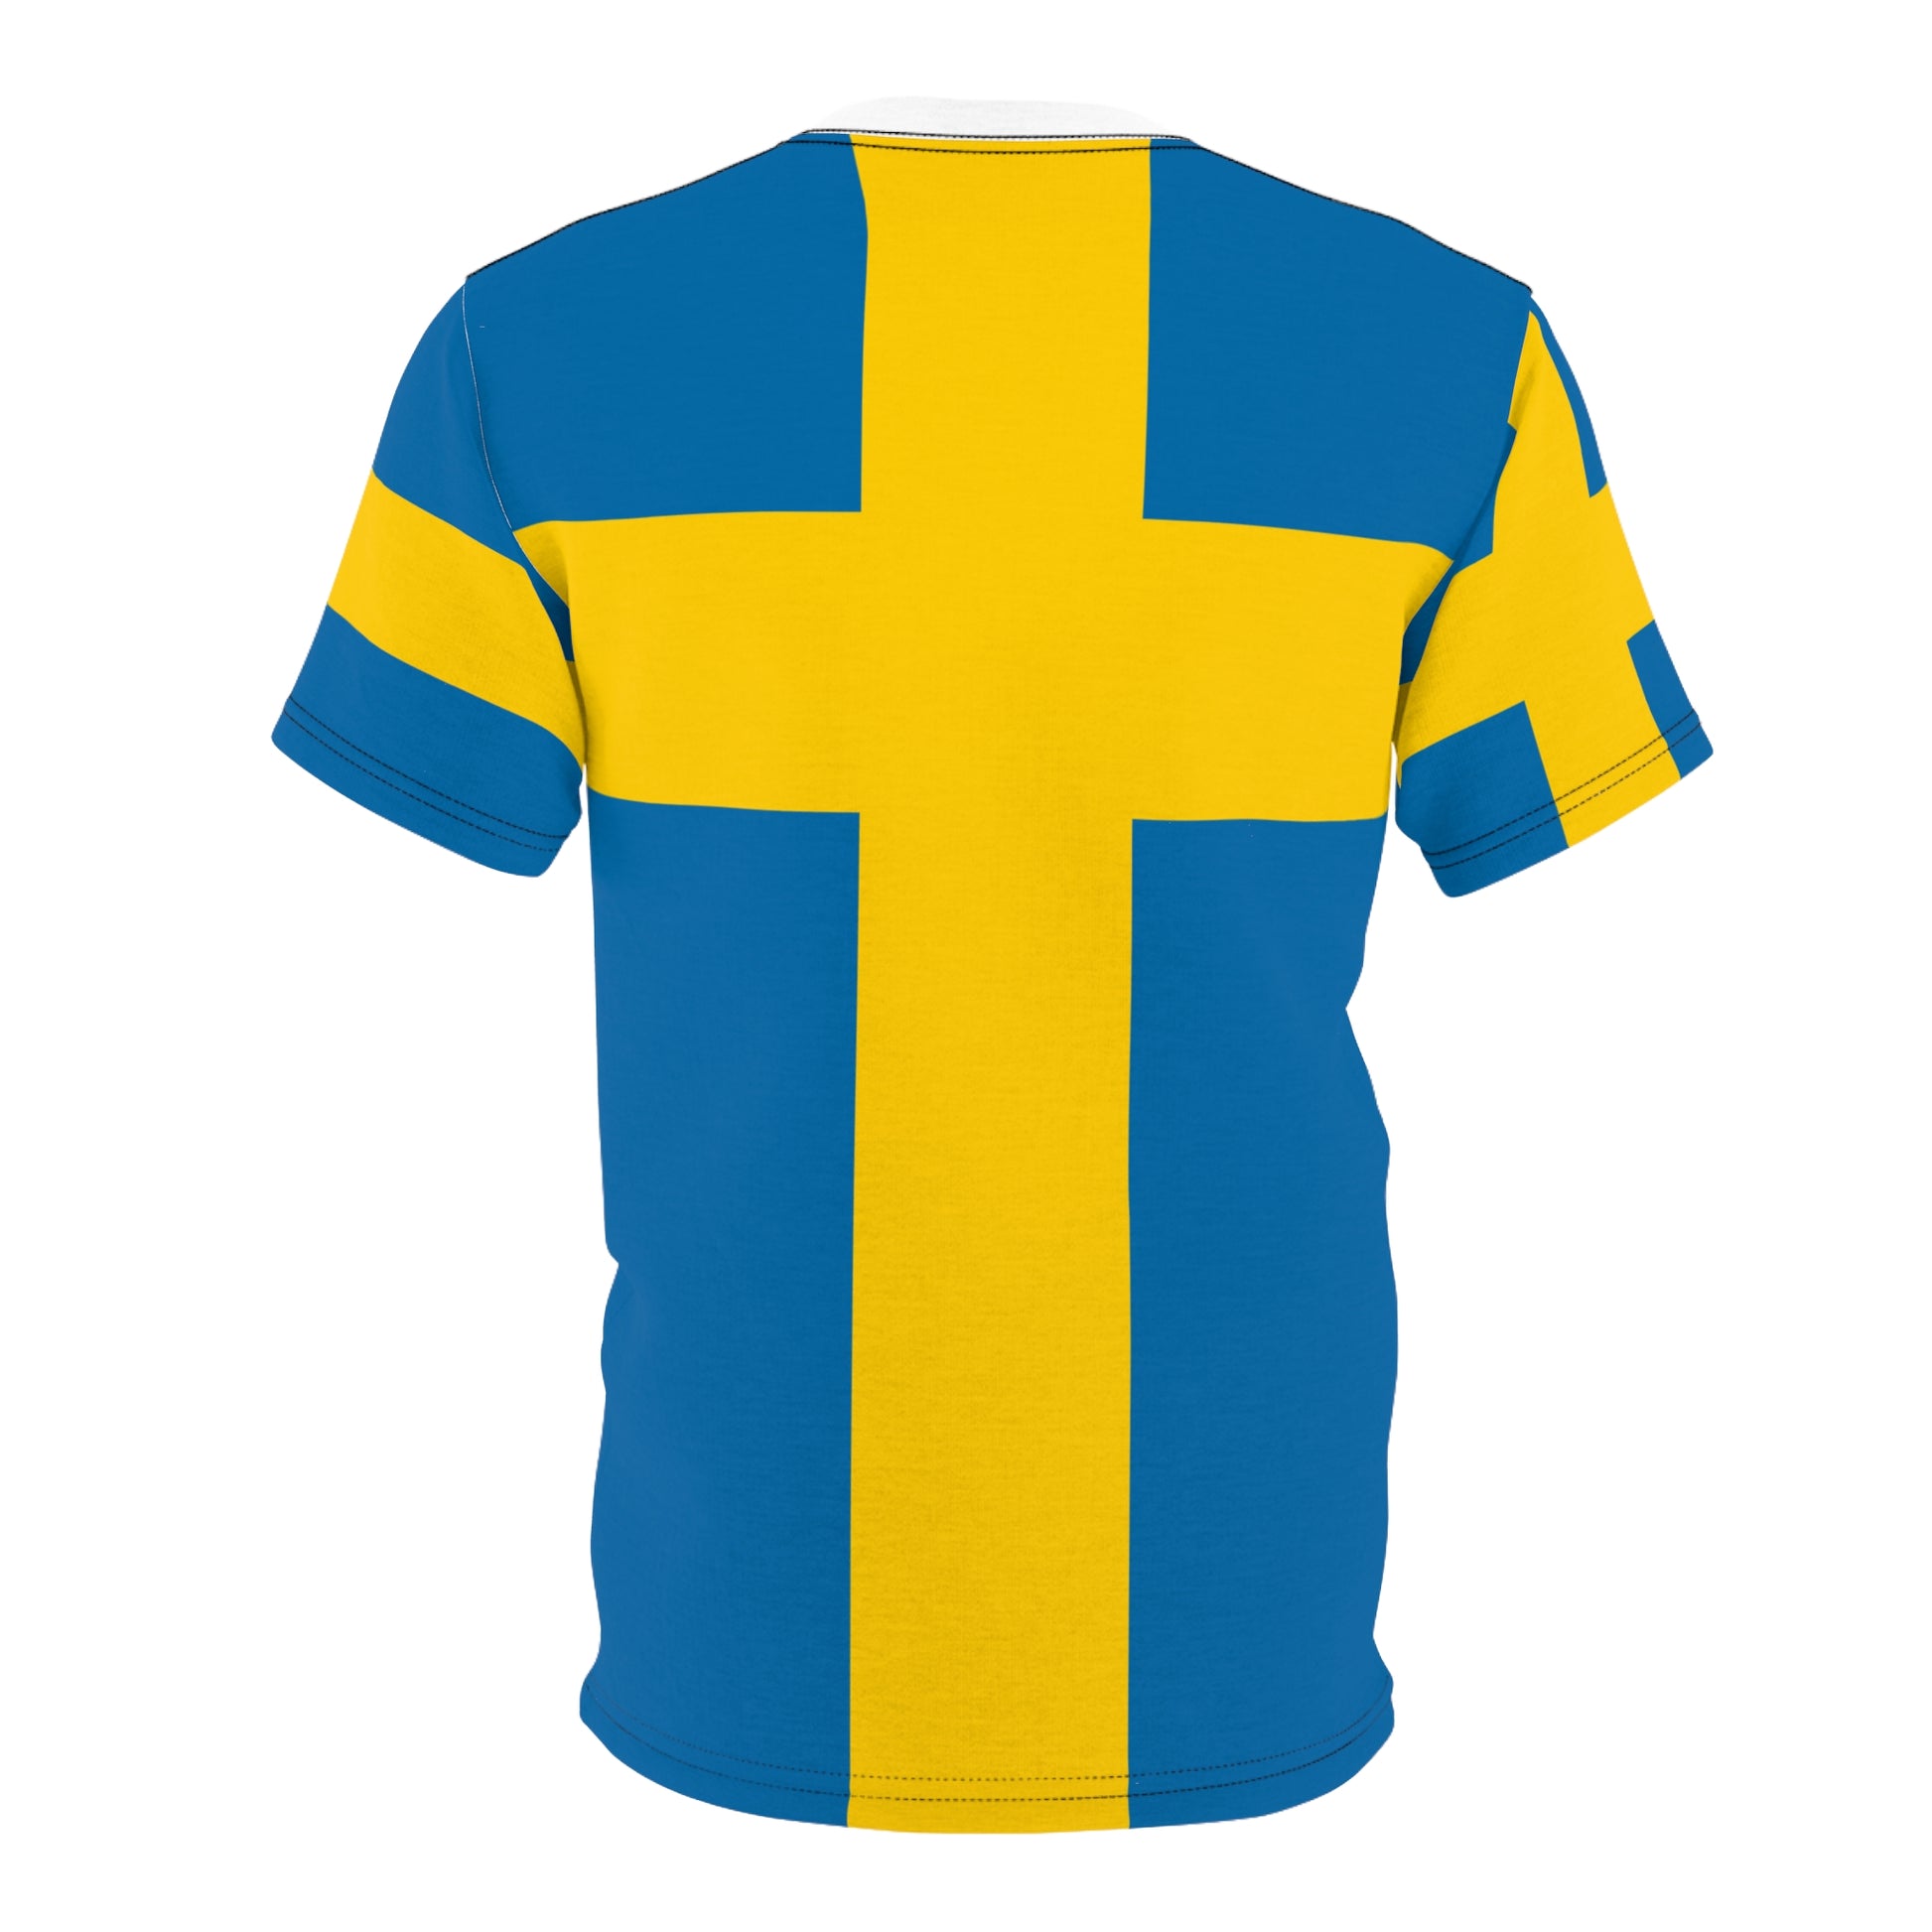 Sweden Flag - International Country Flag Unisex Tee